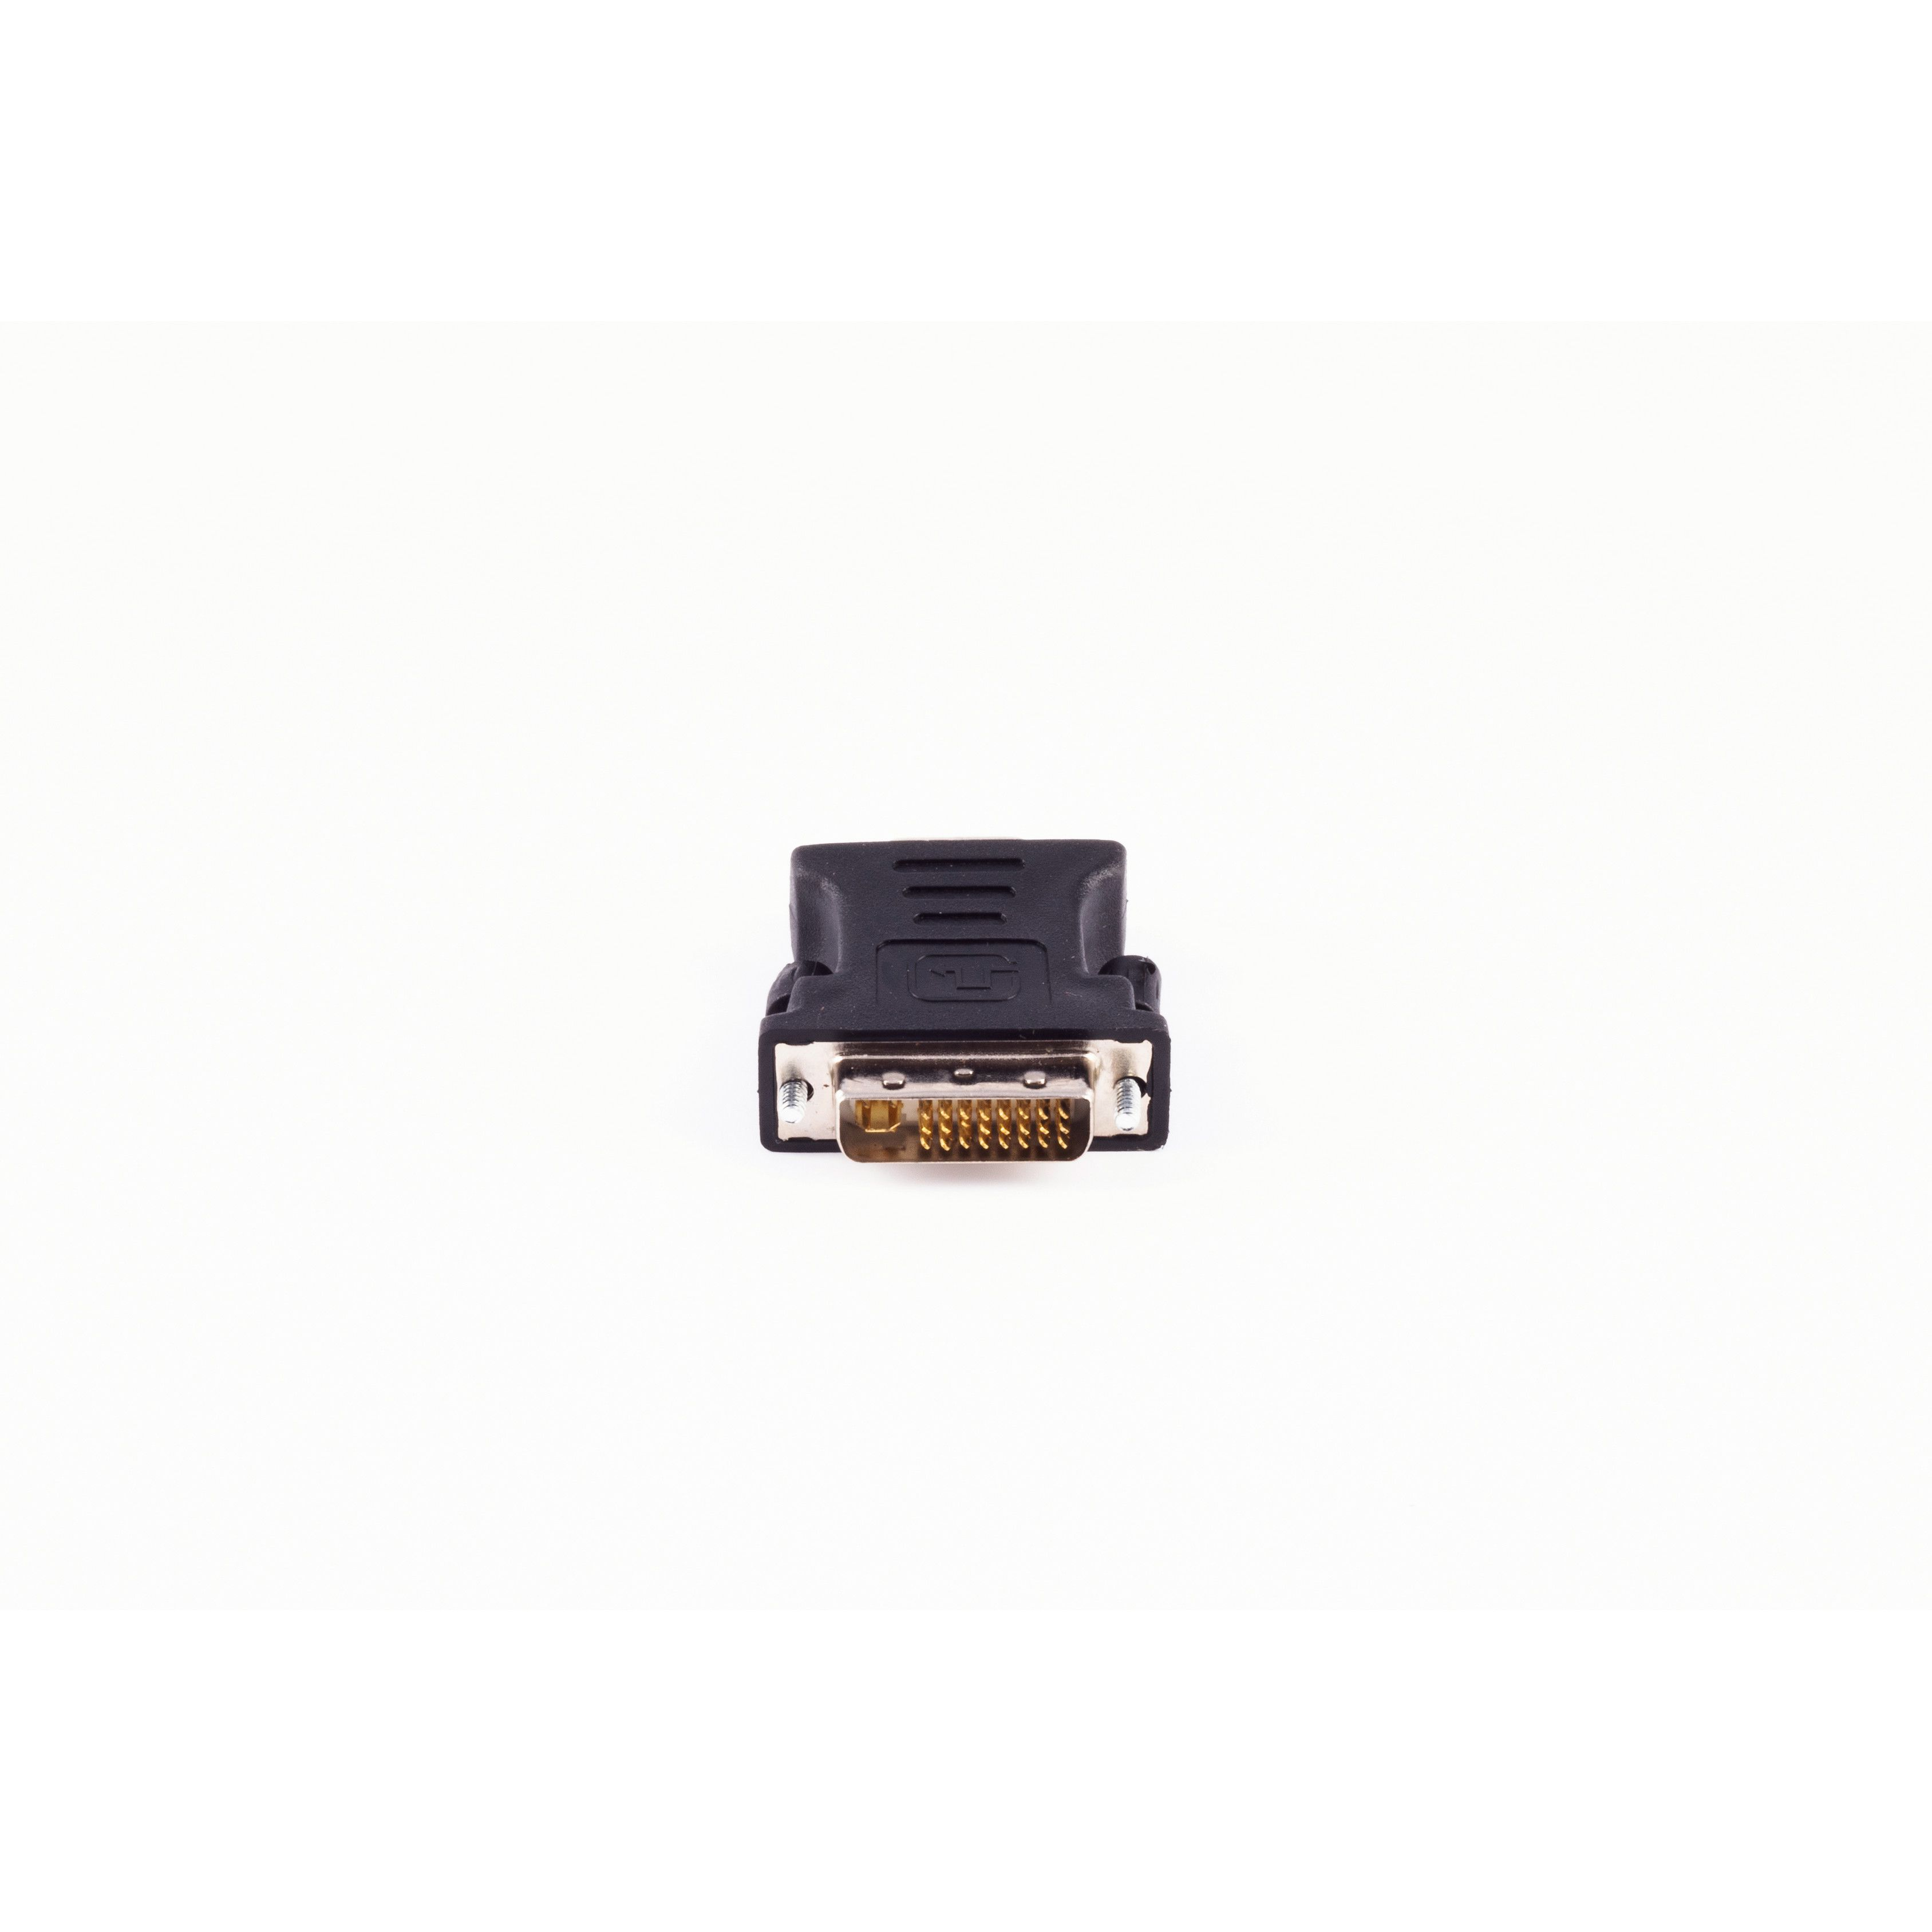 SHIVERPEAKS Adapter DVI-I HDMI/ DVI 24+5 Dual-Link/VGA-Buchse Adapter Stecker